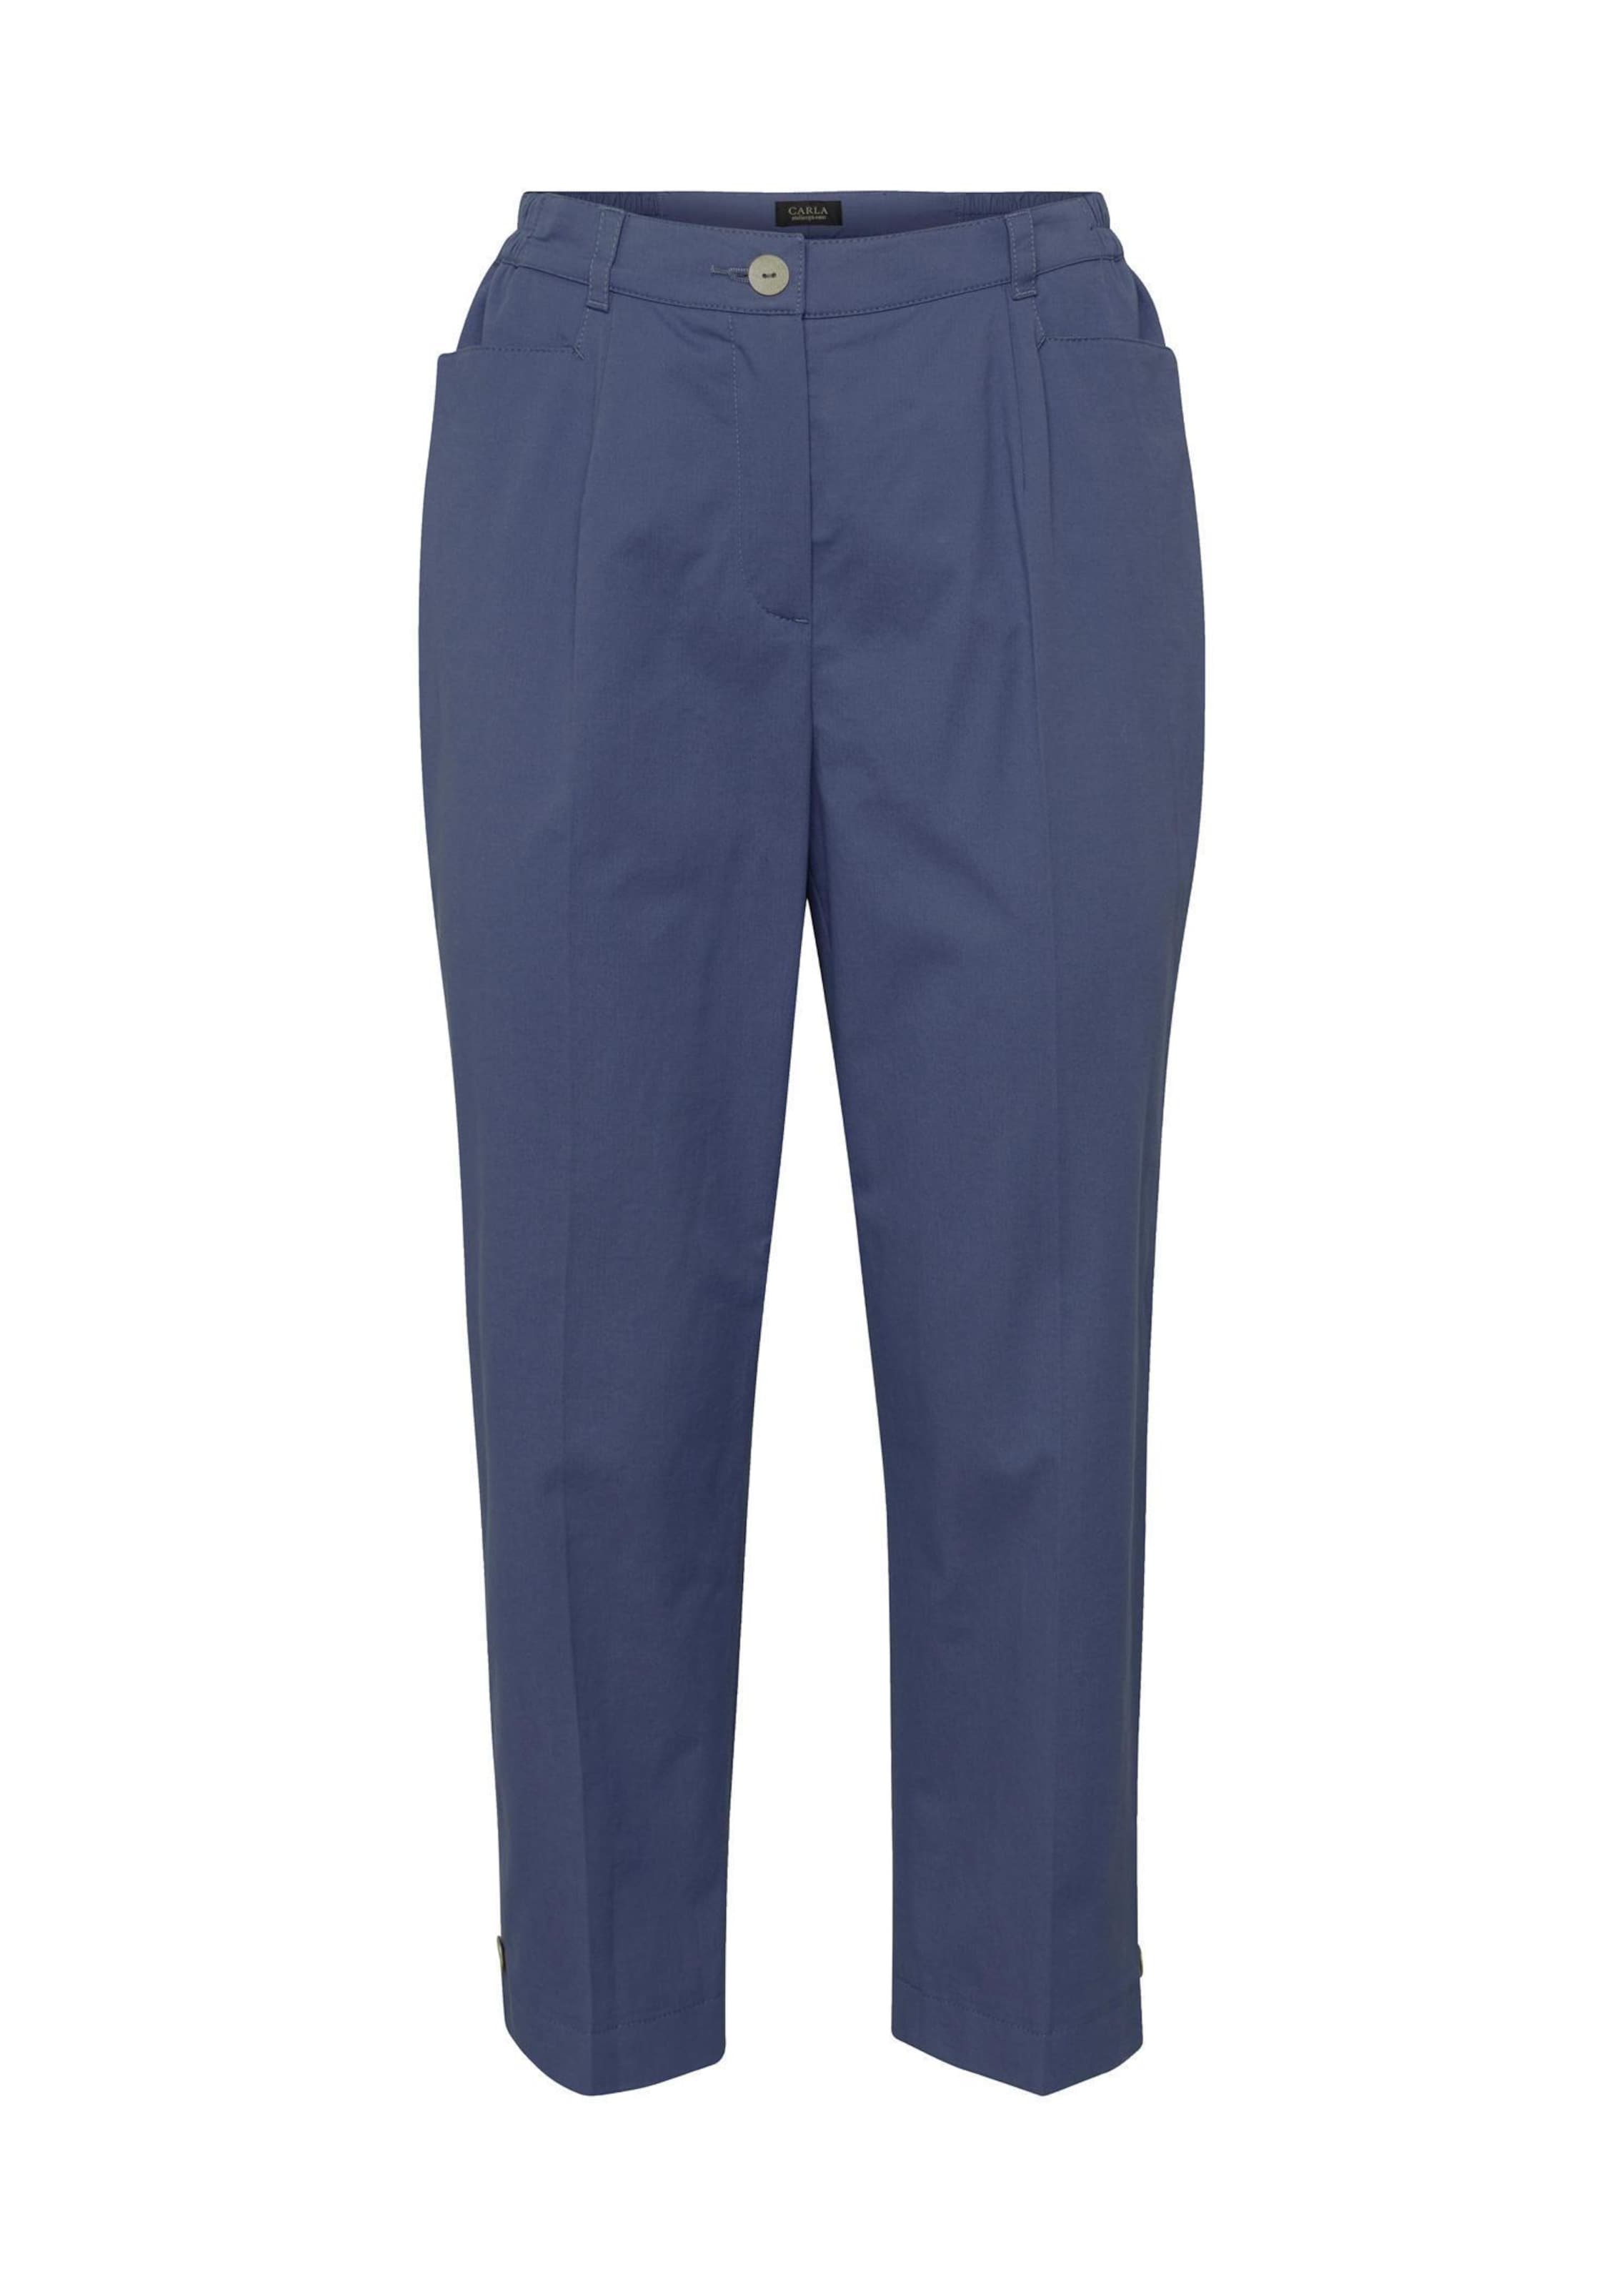 Pantalon 3/4 CARLA en coton Pima - bleu - Gr. 225 de Goldner Fashion